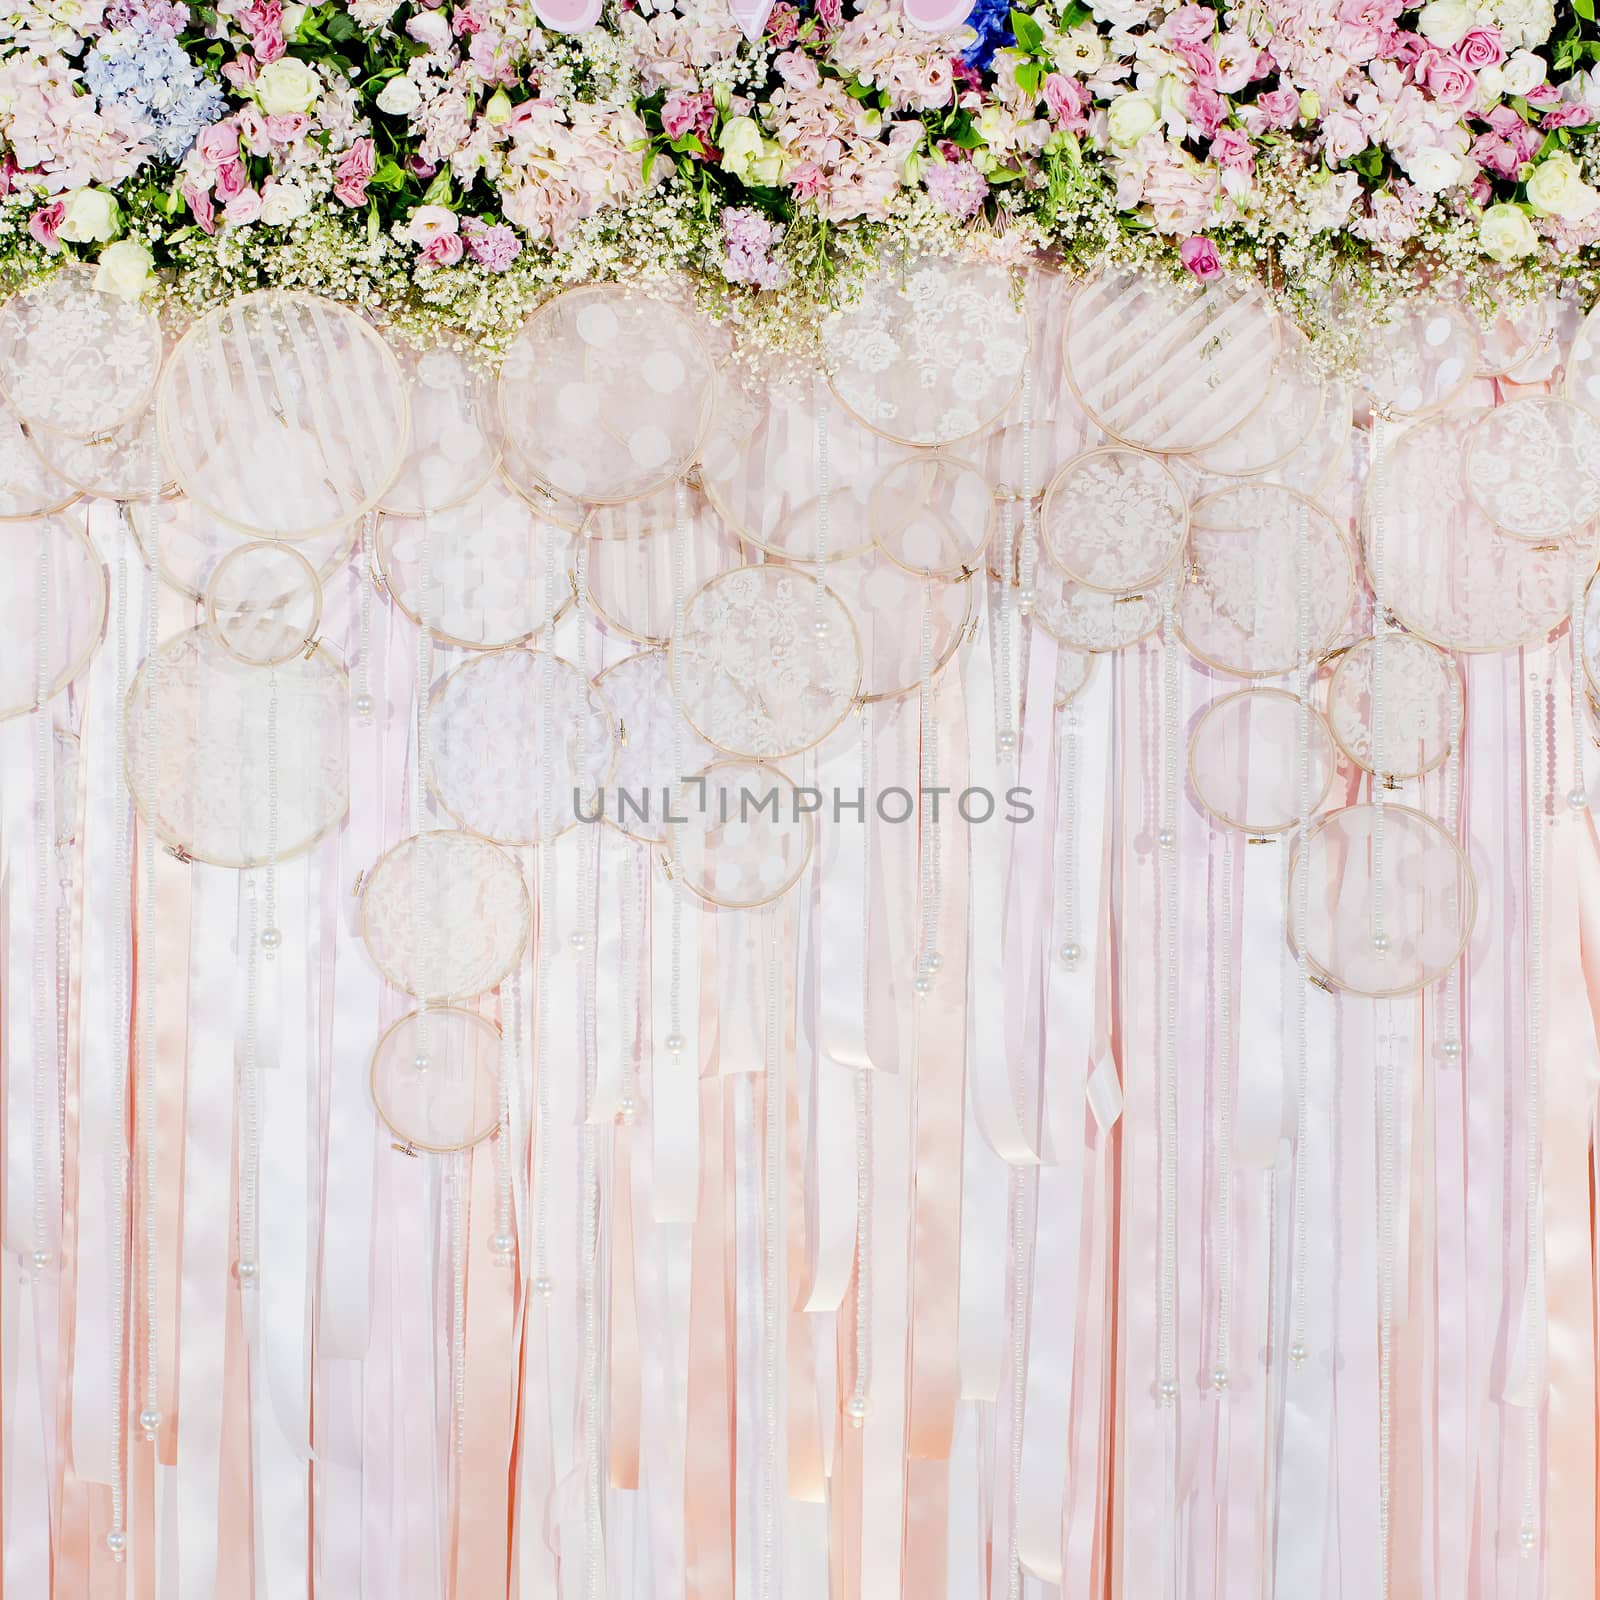 Beautiful flowers background for wedding scene by art9858